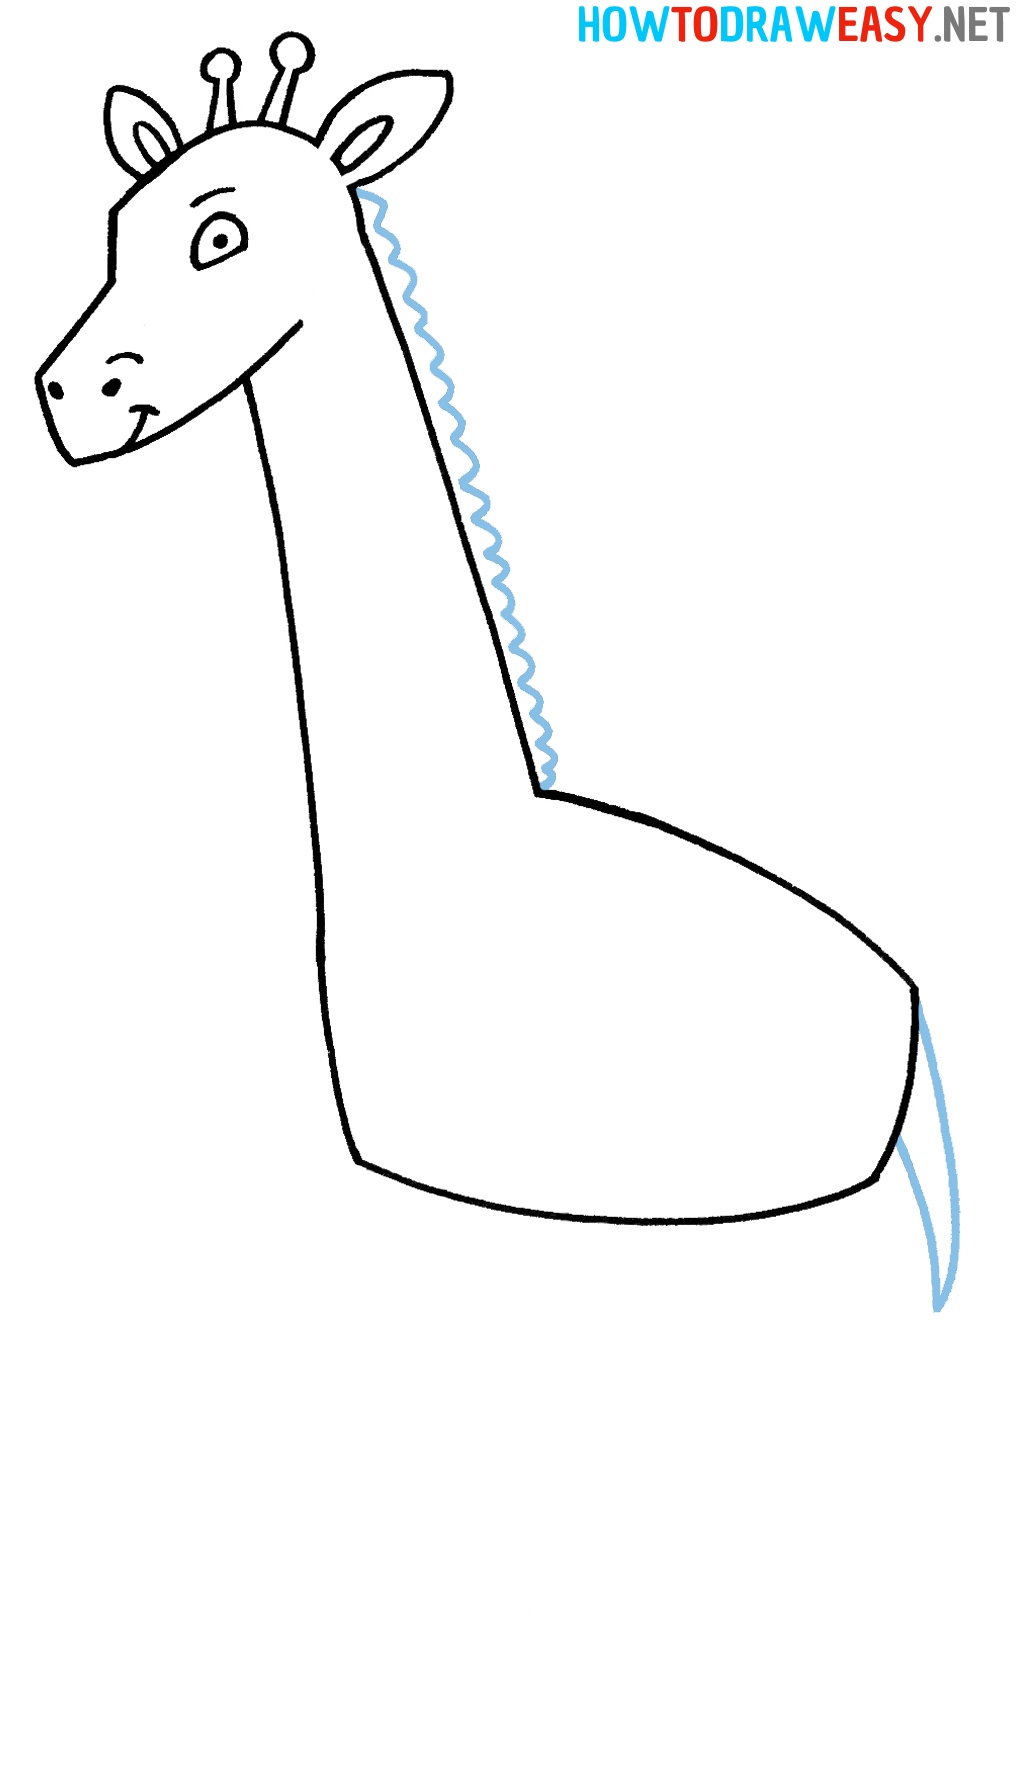 How to Draw a Giraffe Body